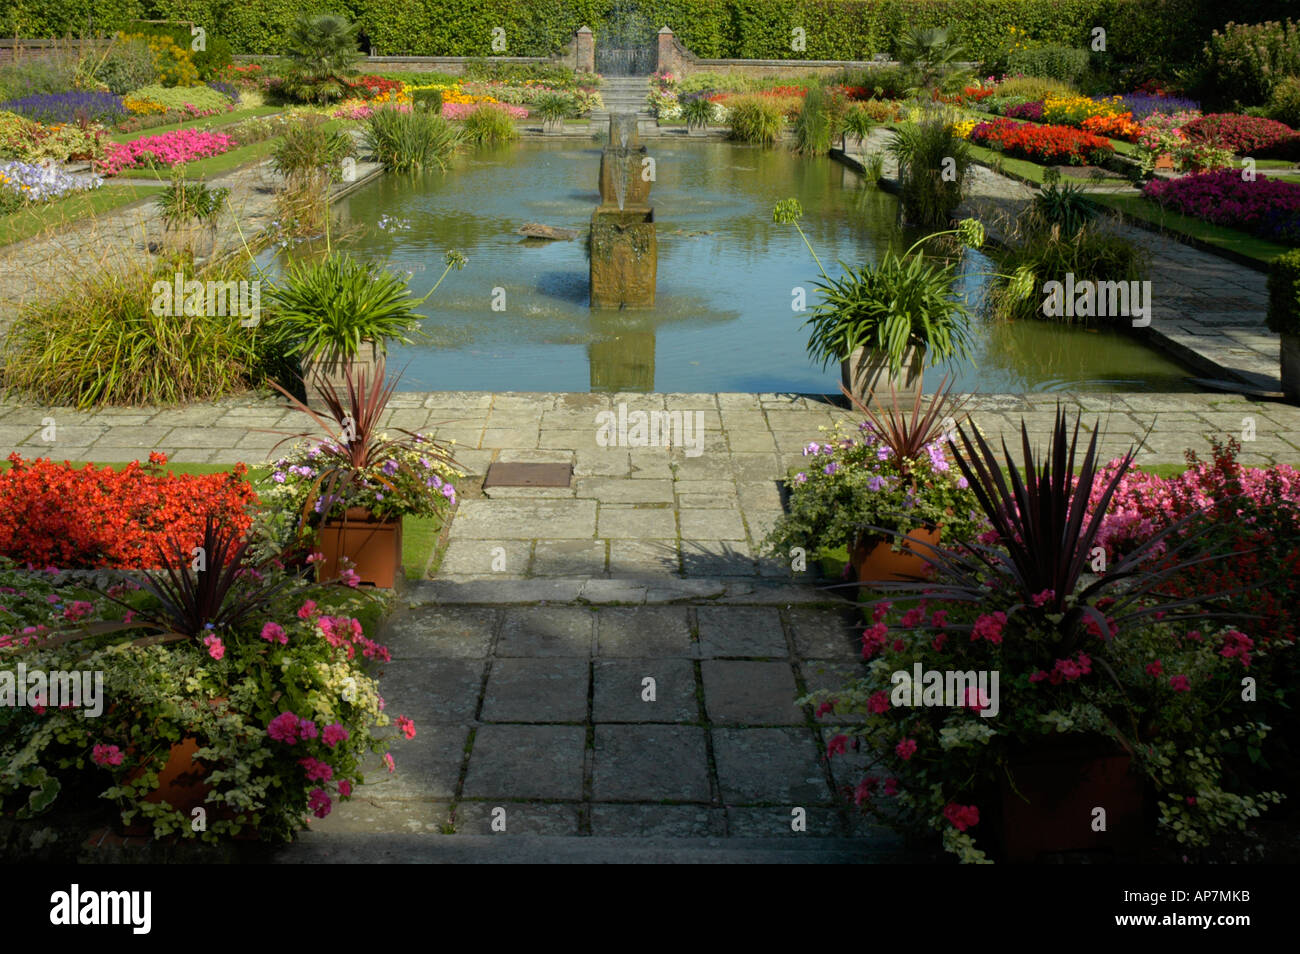 The Sunken Garden at Kensington Palace Gardens, London Stock Photo - Alamy